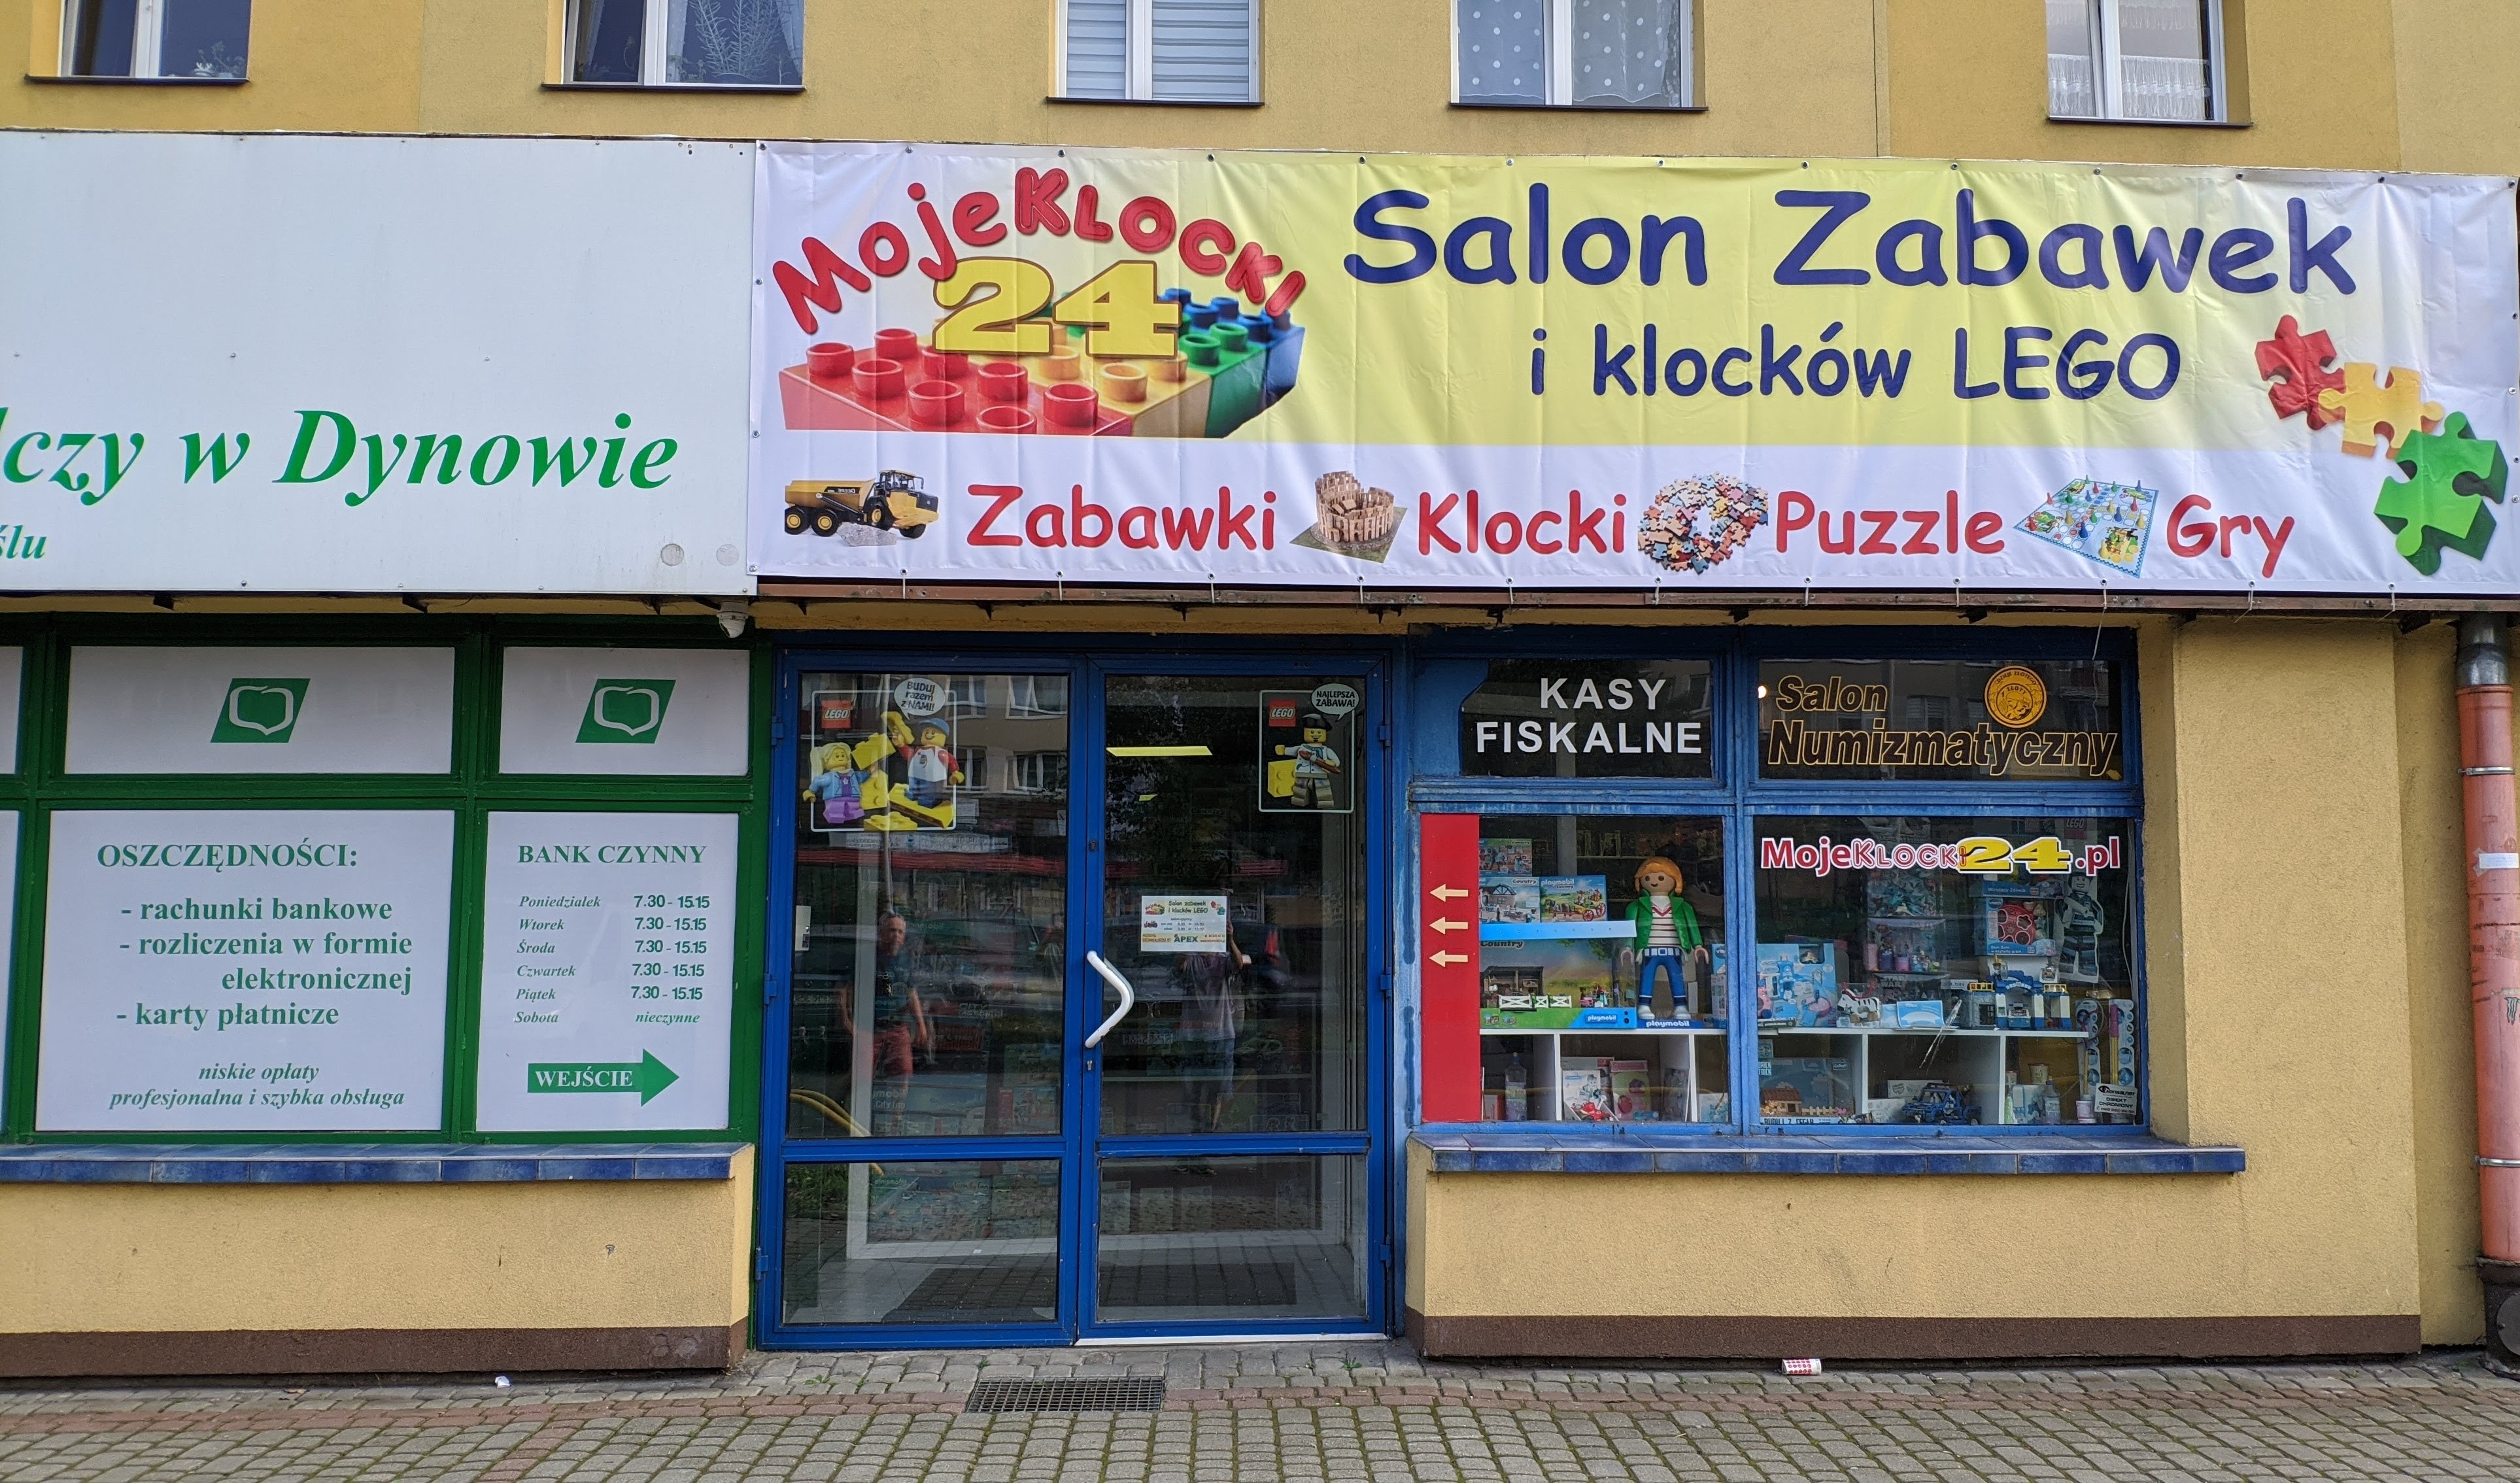 Salon klocków LEGO MojeKlocki24.pl